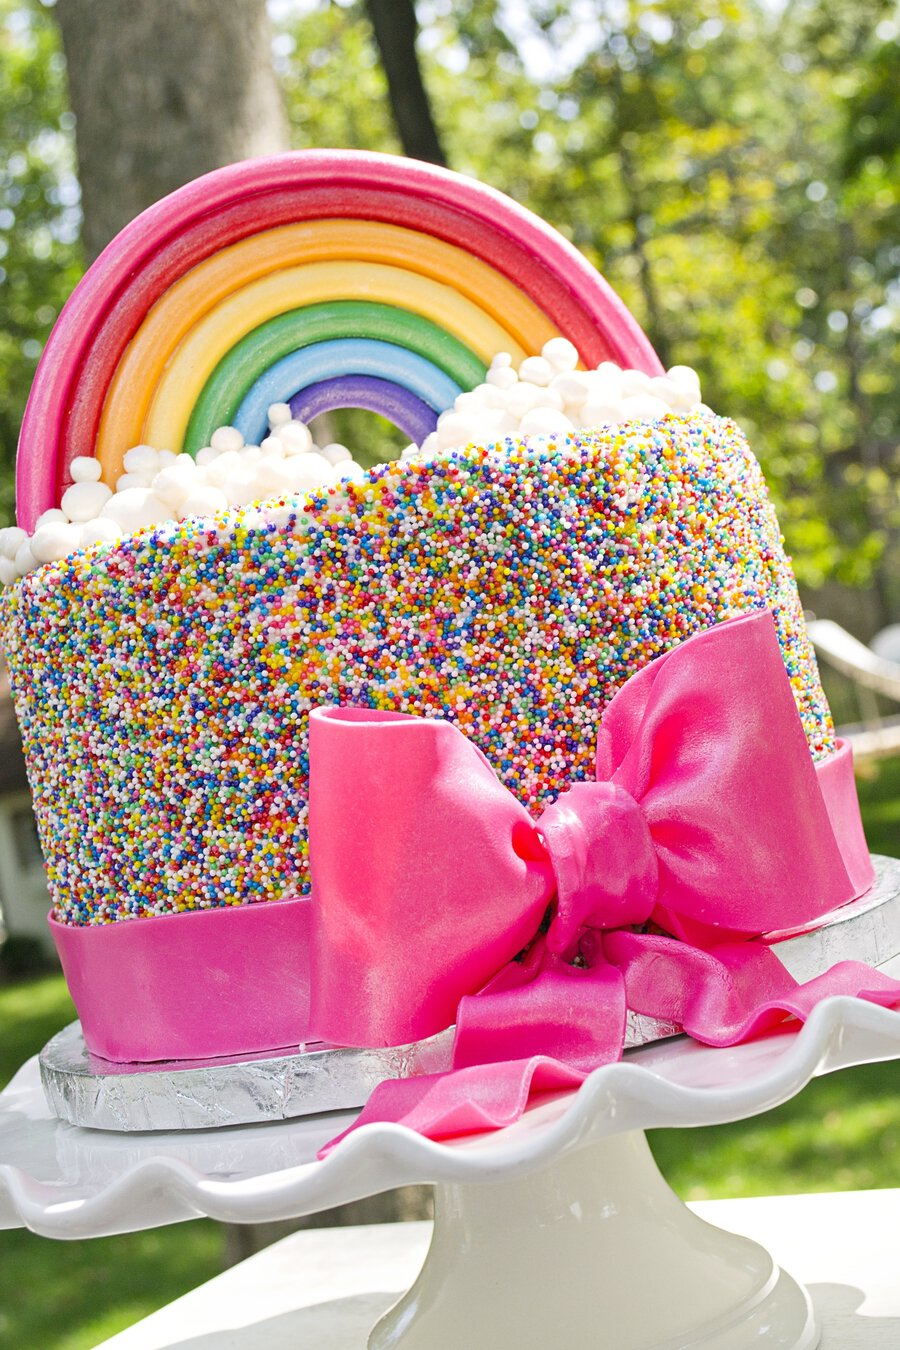 Make their birthday extra magical with these rainbow birthday cake ideas